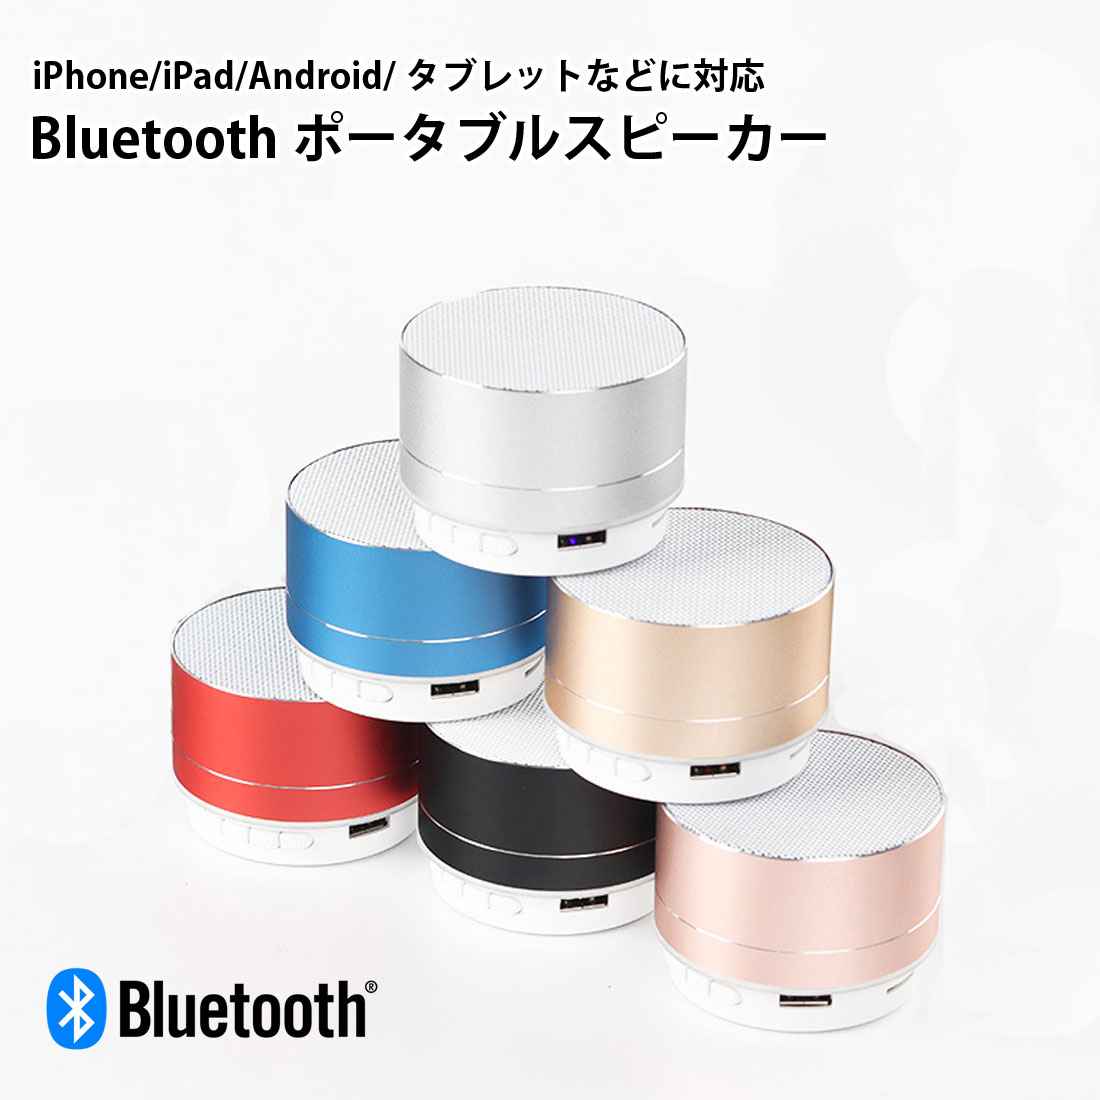 Bluetoothスピーカー ●送料無料●Bluetooth スピーカー ポータブル ワイヤレススピーカー 高音質 低音強化 LSF-034 【送料無料】【RCP】